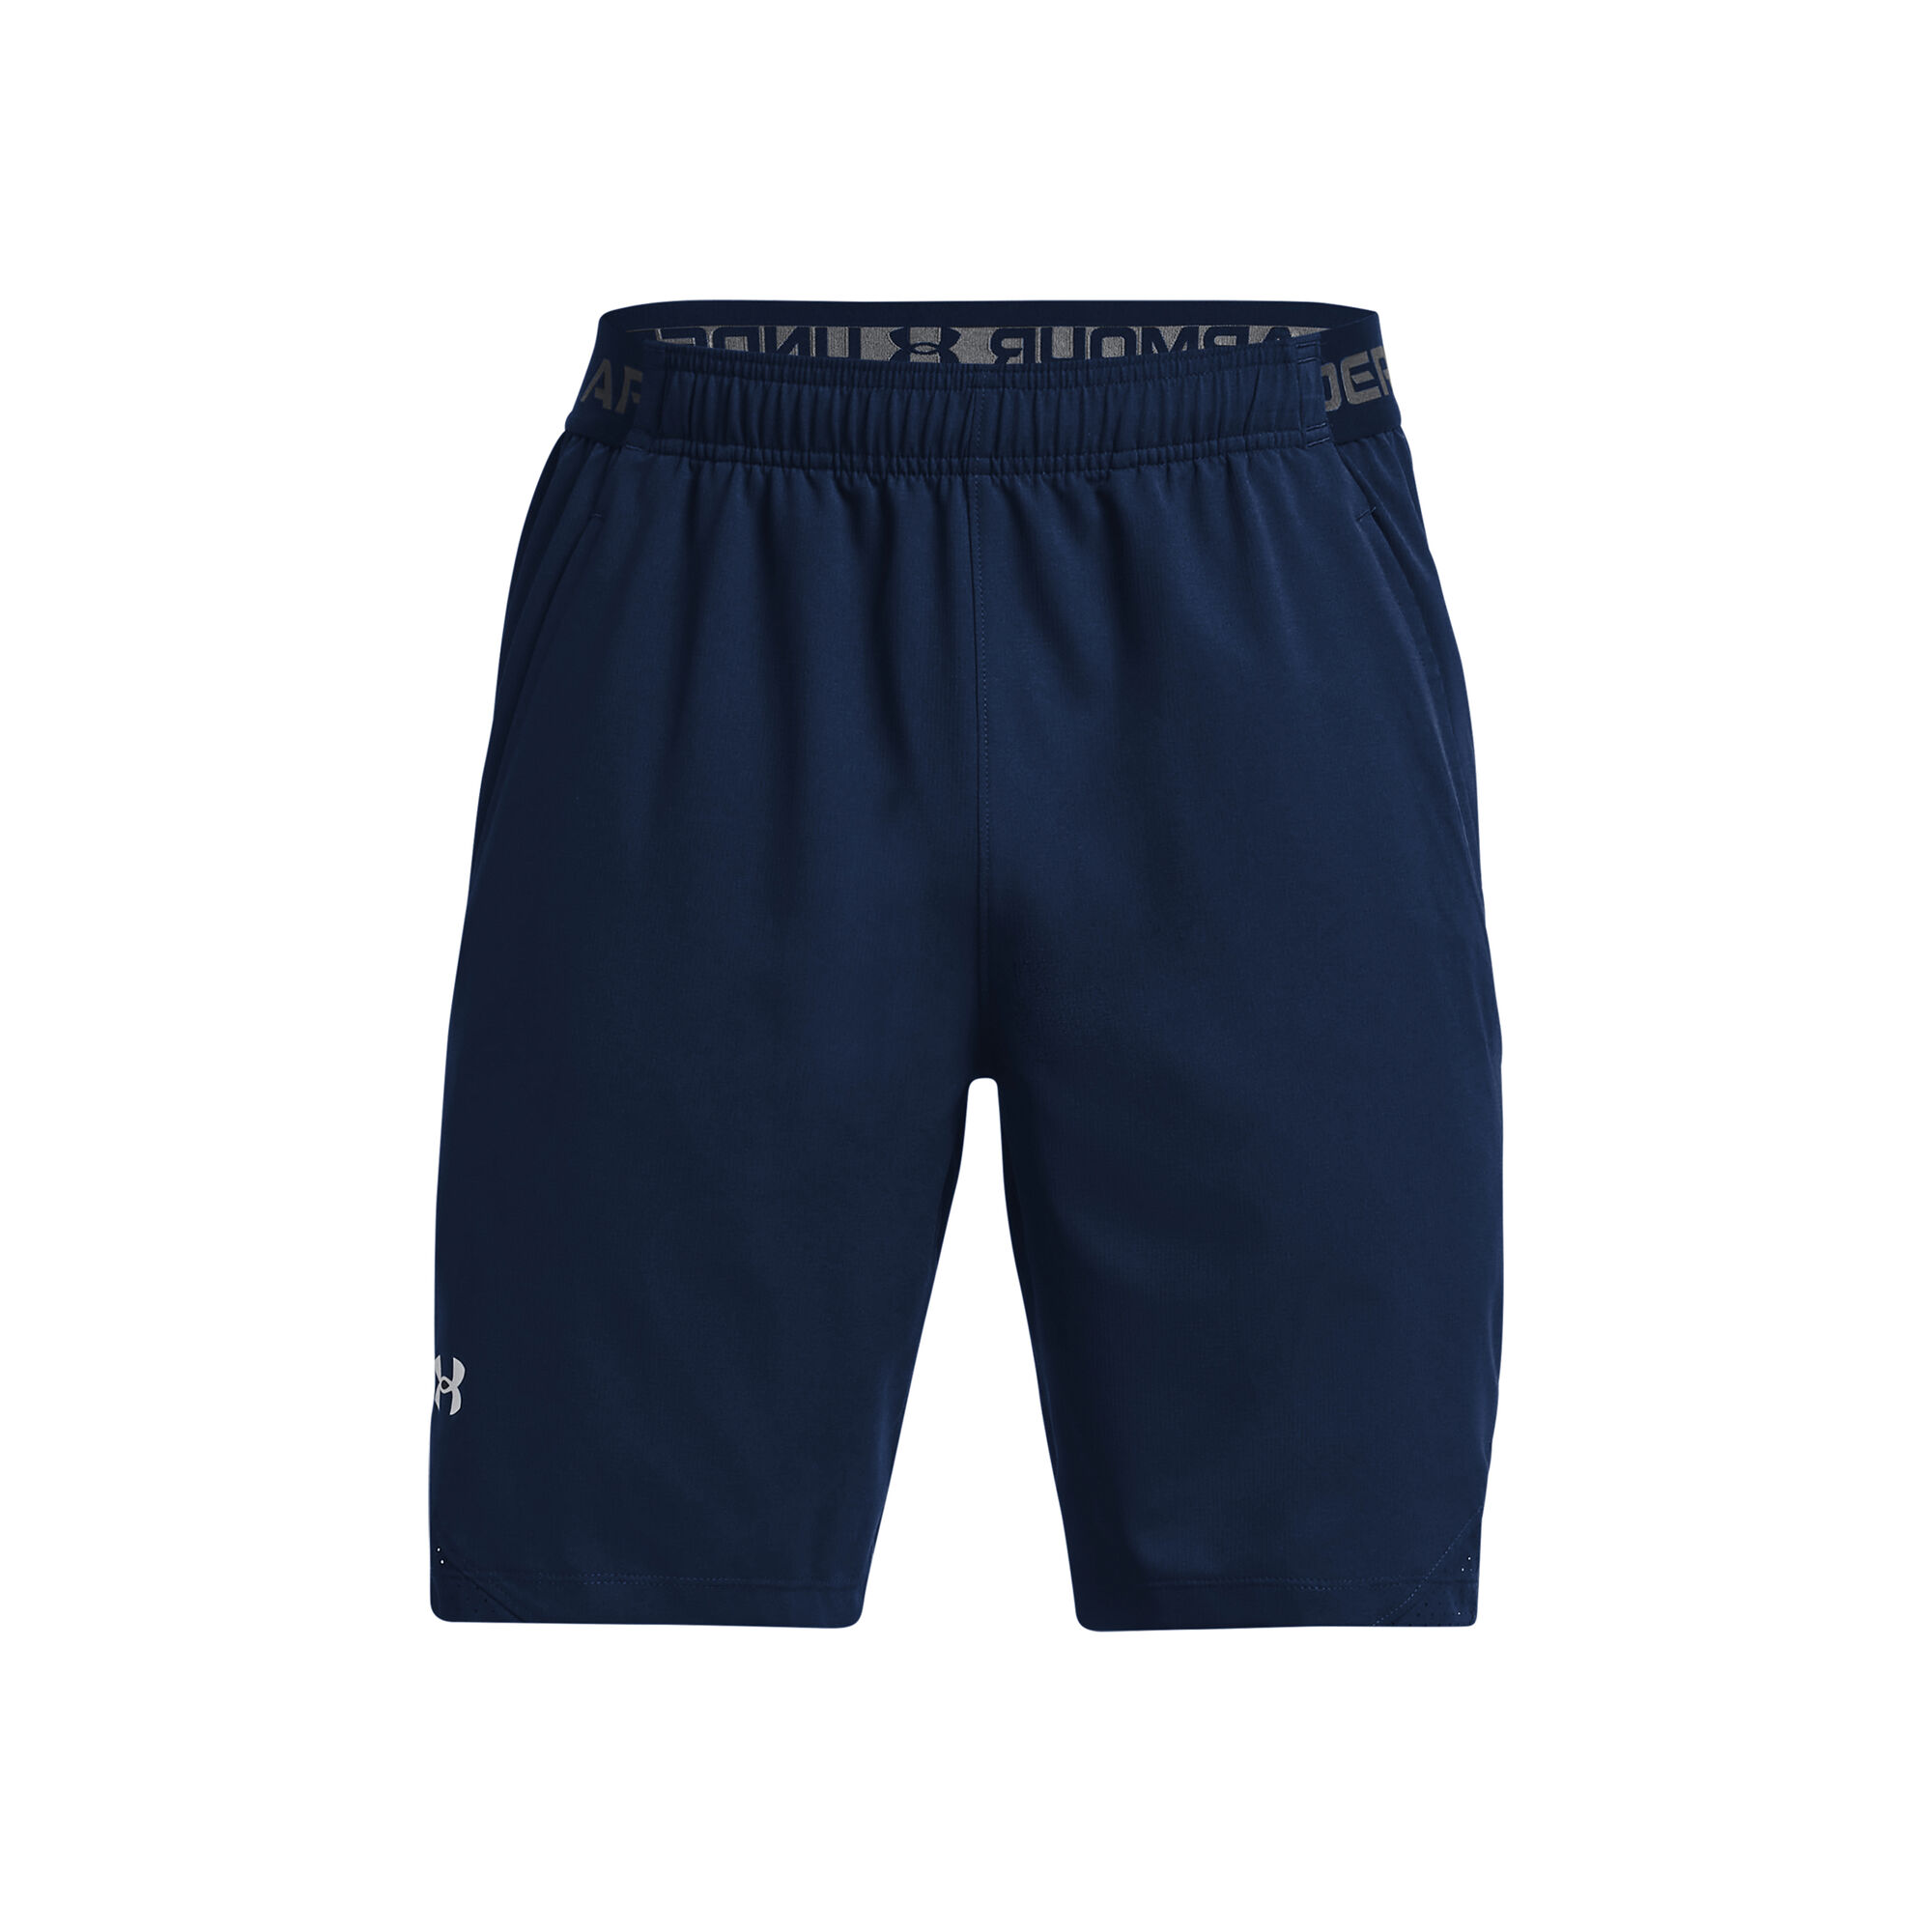 Buy Under Armour Vanish Woven 8in Shorts Men Dark Blue online